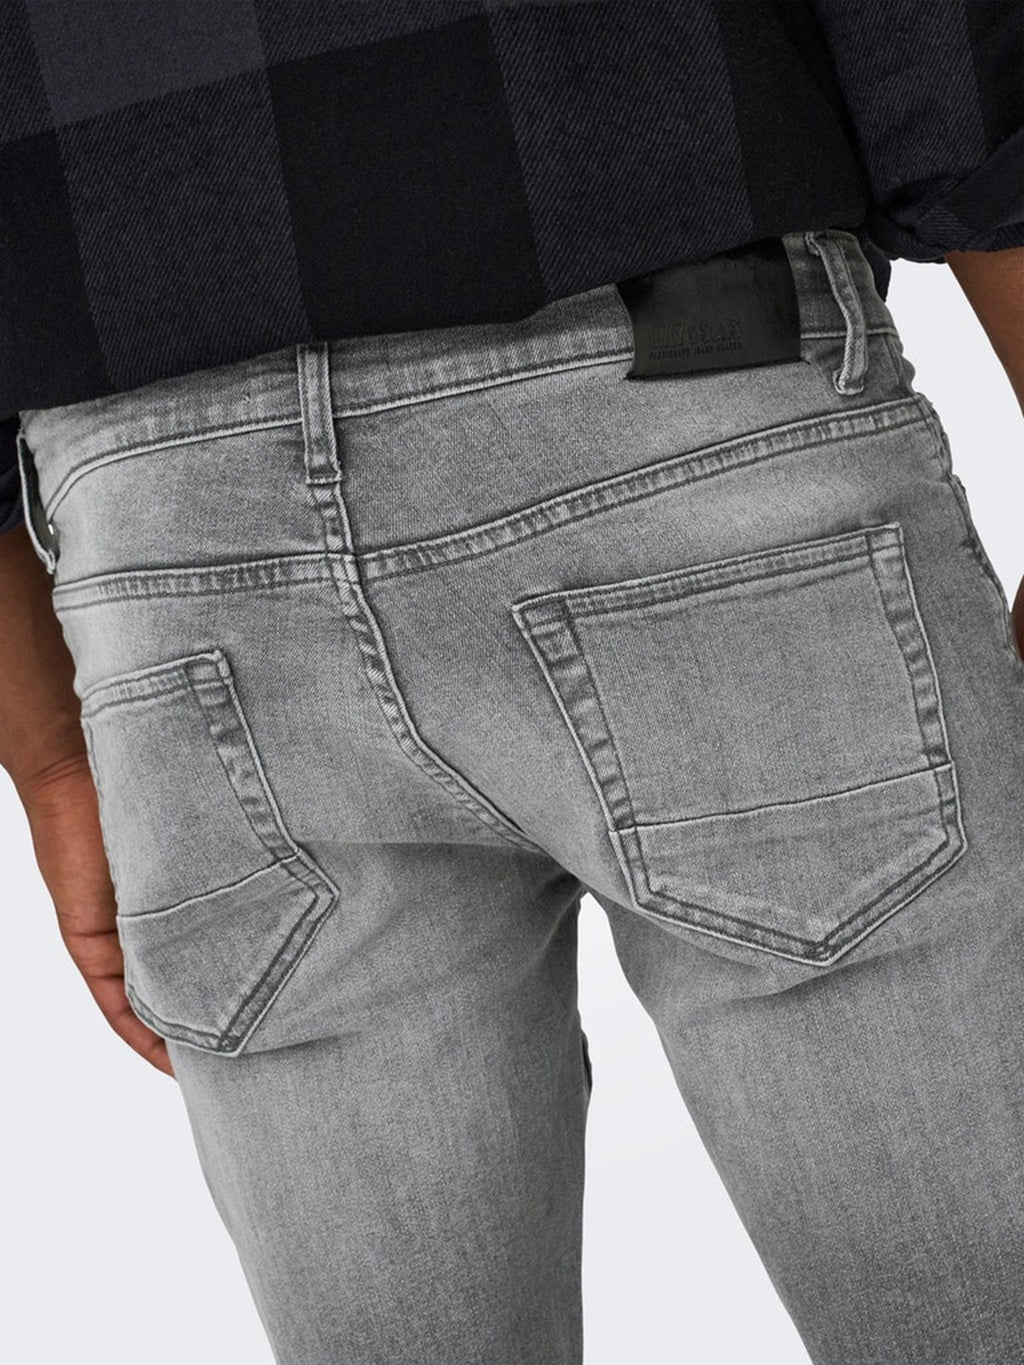 Loom Slim Grey Jeans - Grey